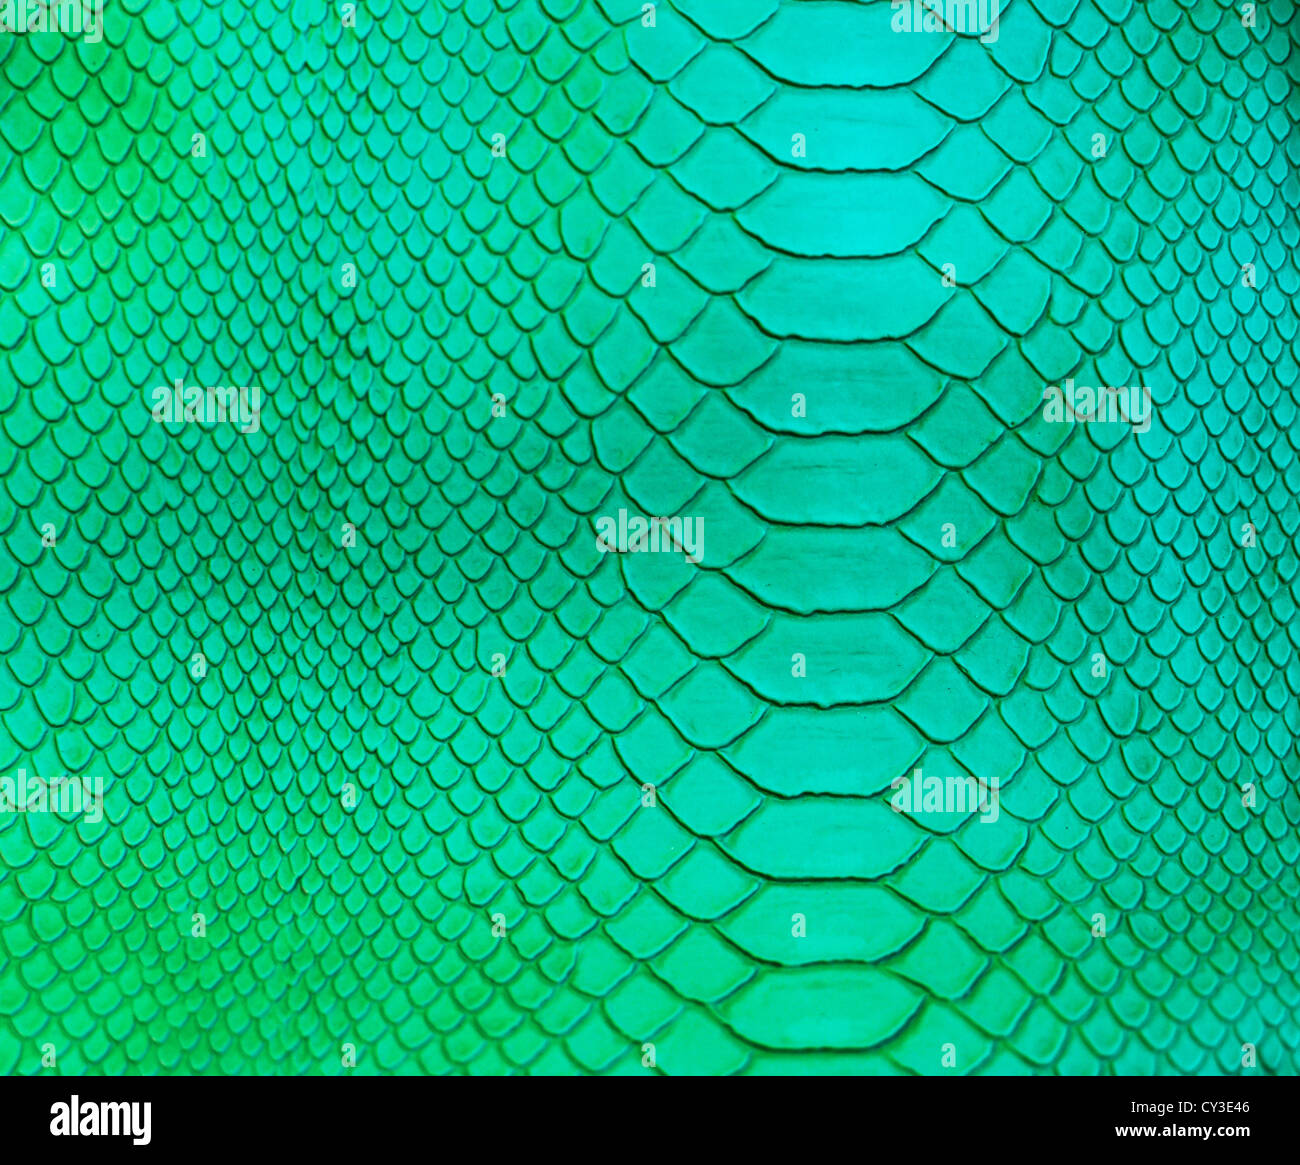 Crocodile skin pattern Stock Photo - Alamy